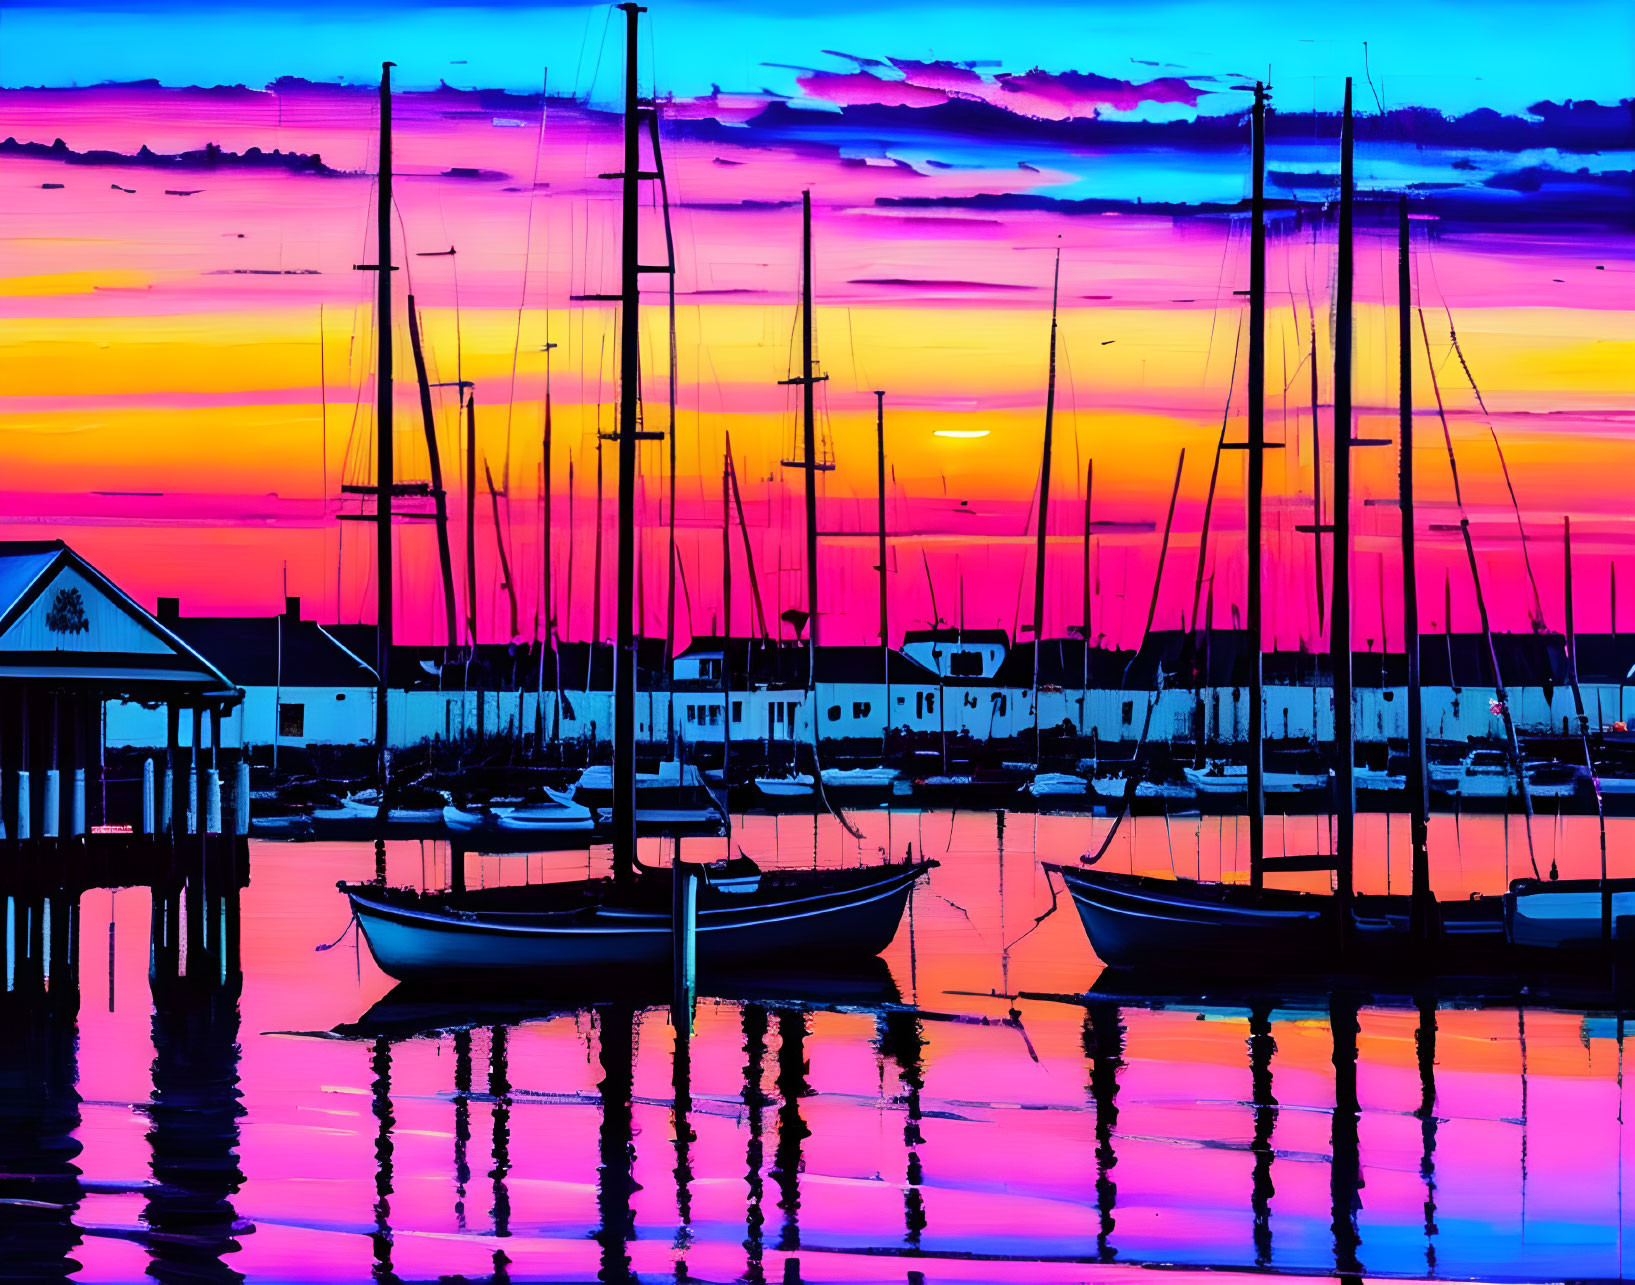 Pink sunset. Harbor